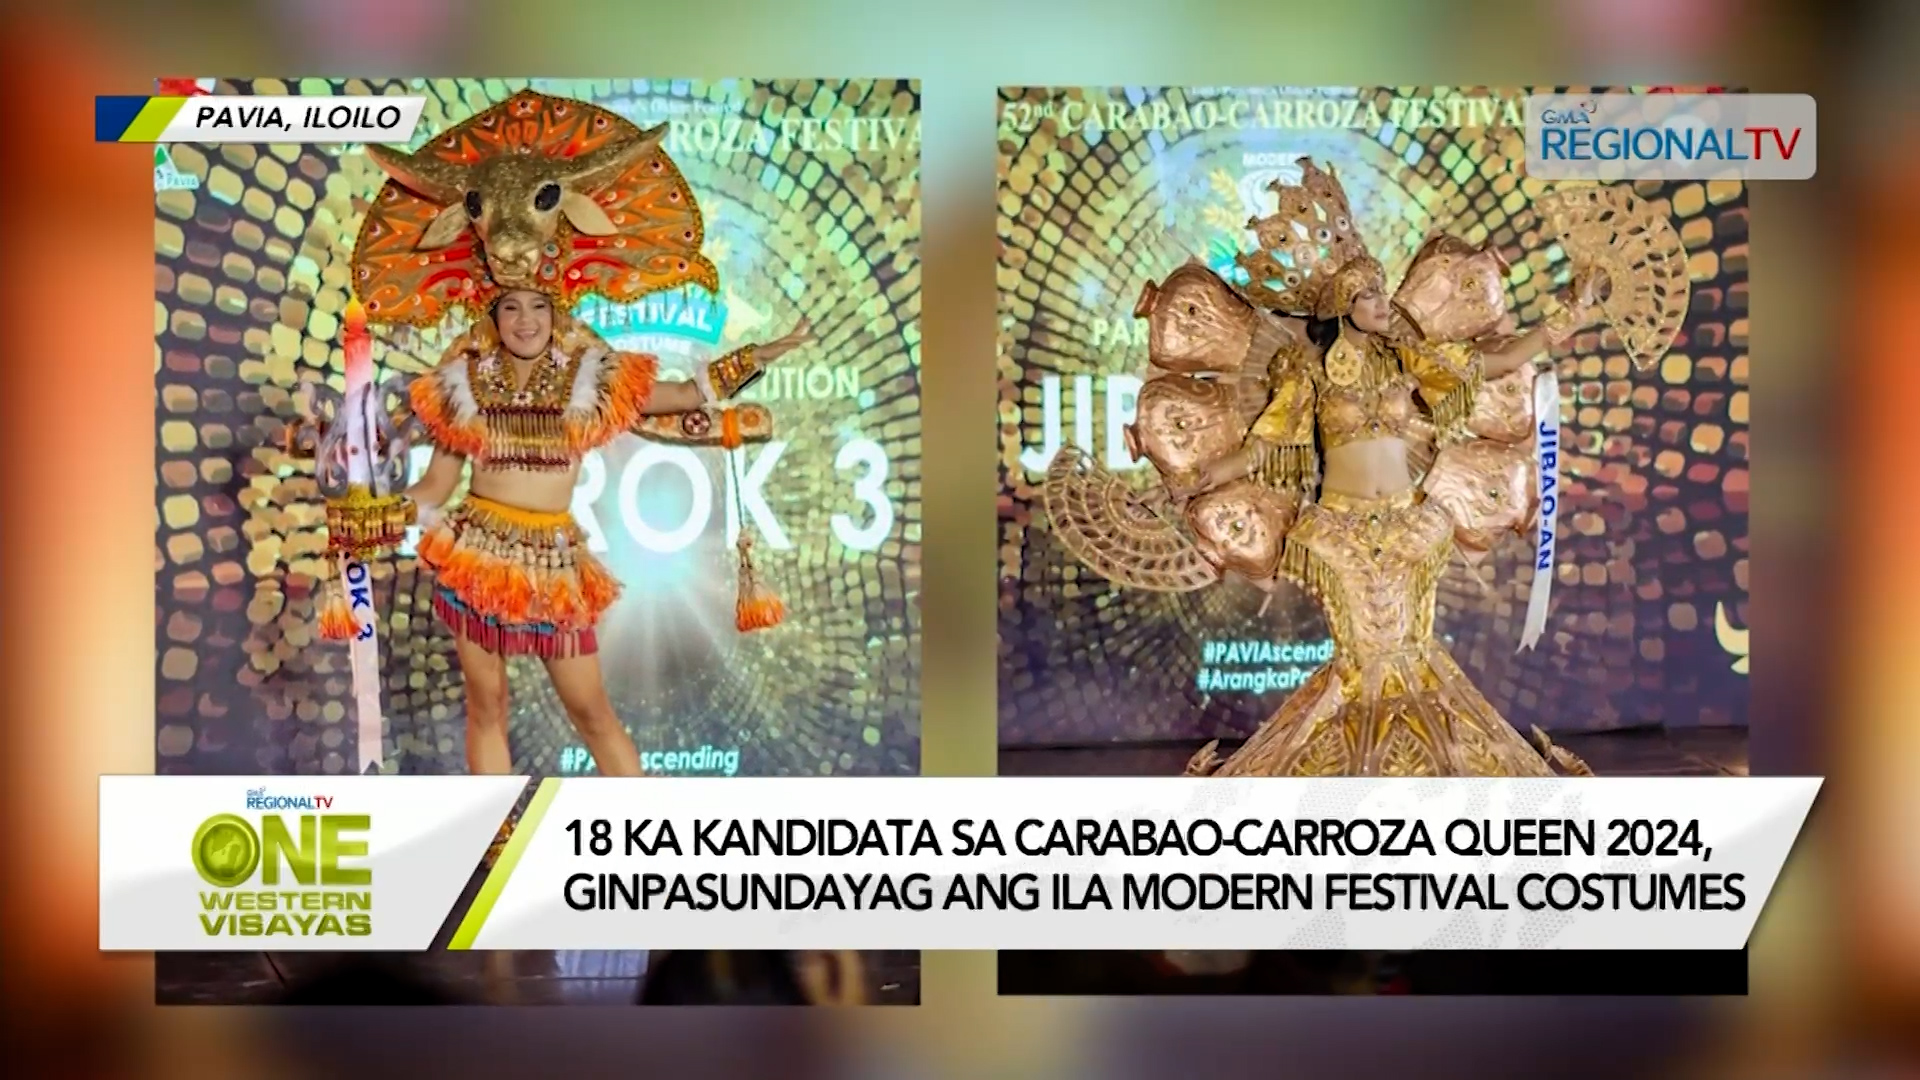 18 ka kandidata sa Carabao-Carroza queen 2024, sa ila modern festival costumes